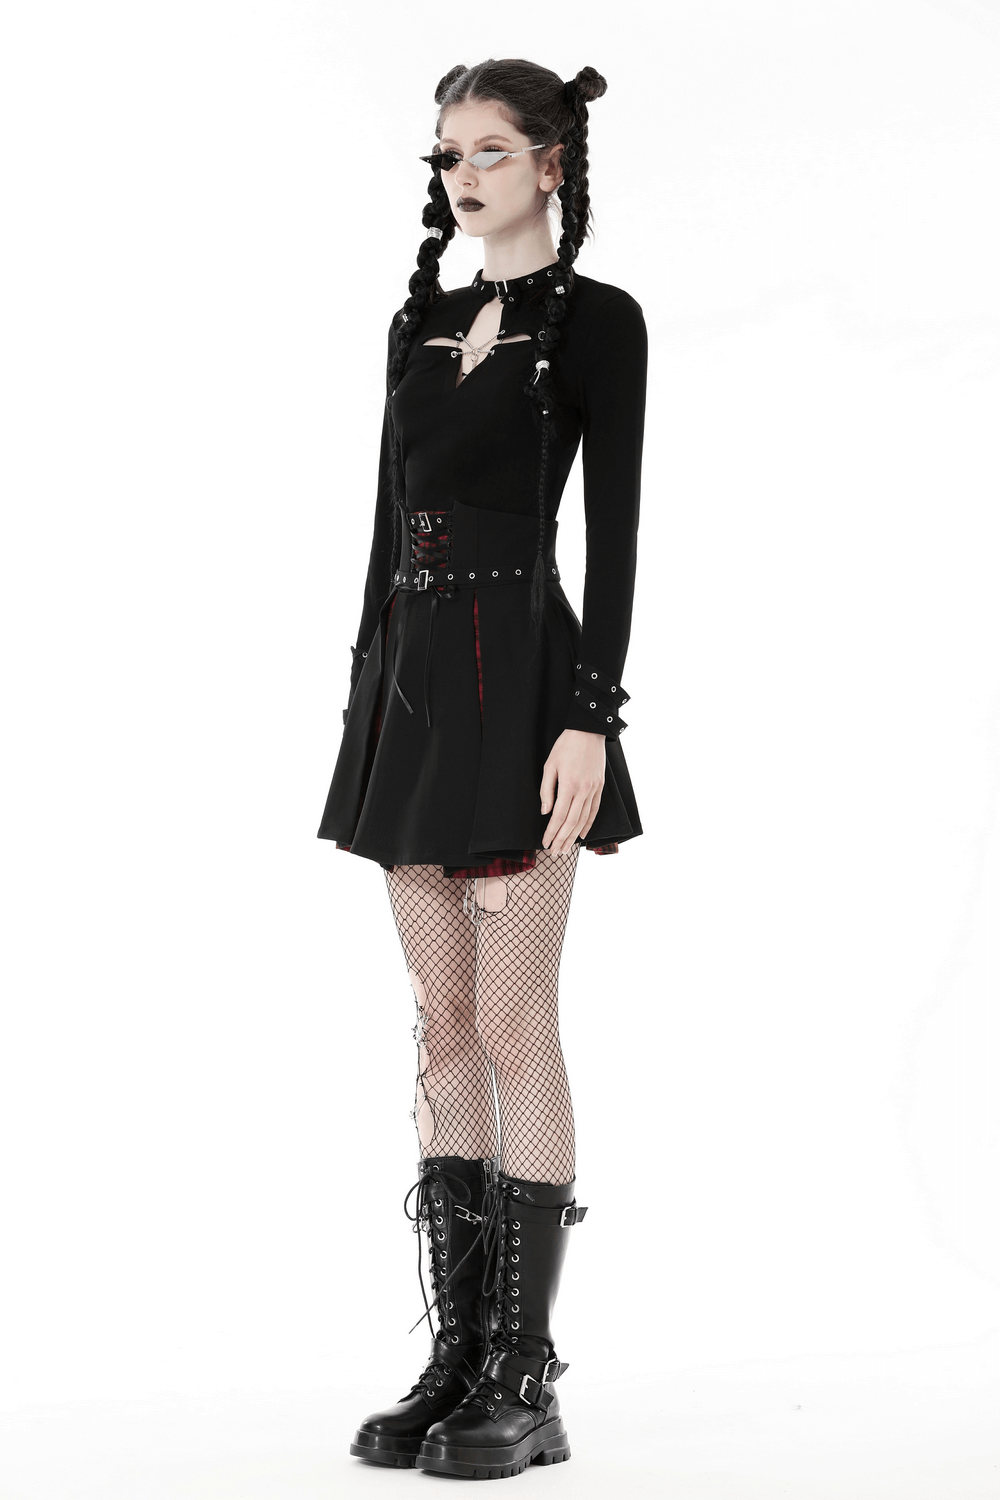 Dark Gothic Punk Women's Cutout Cross Crop Top